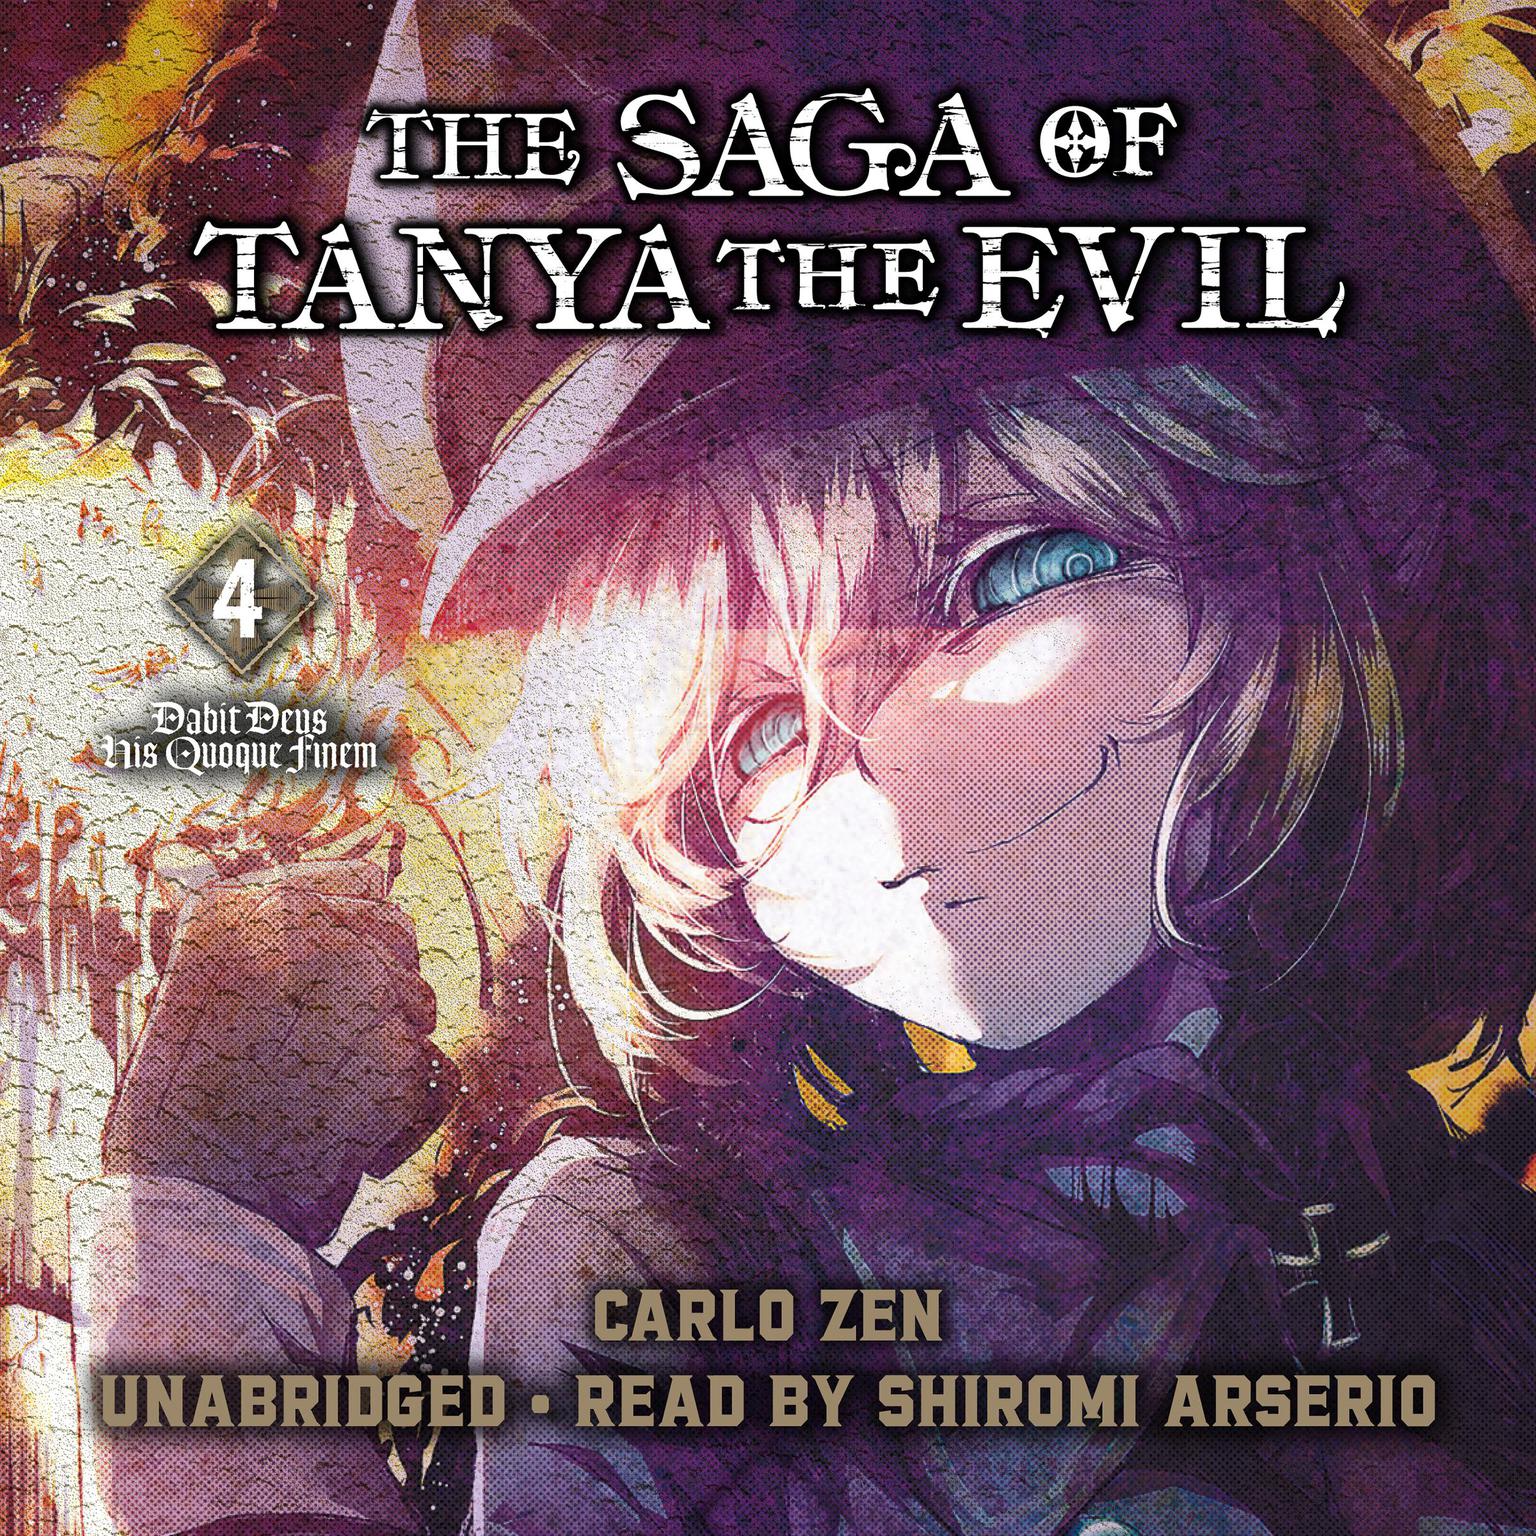 The Saga of Tanya the Evil, Vol. 4: Dabit Deus His Quoque Finem Audiobook, by Carlo Zen